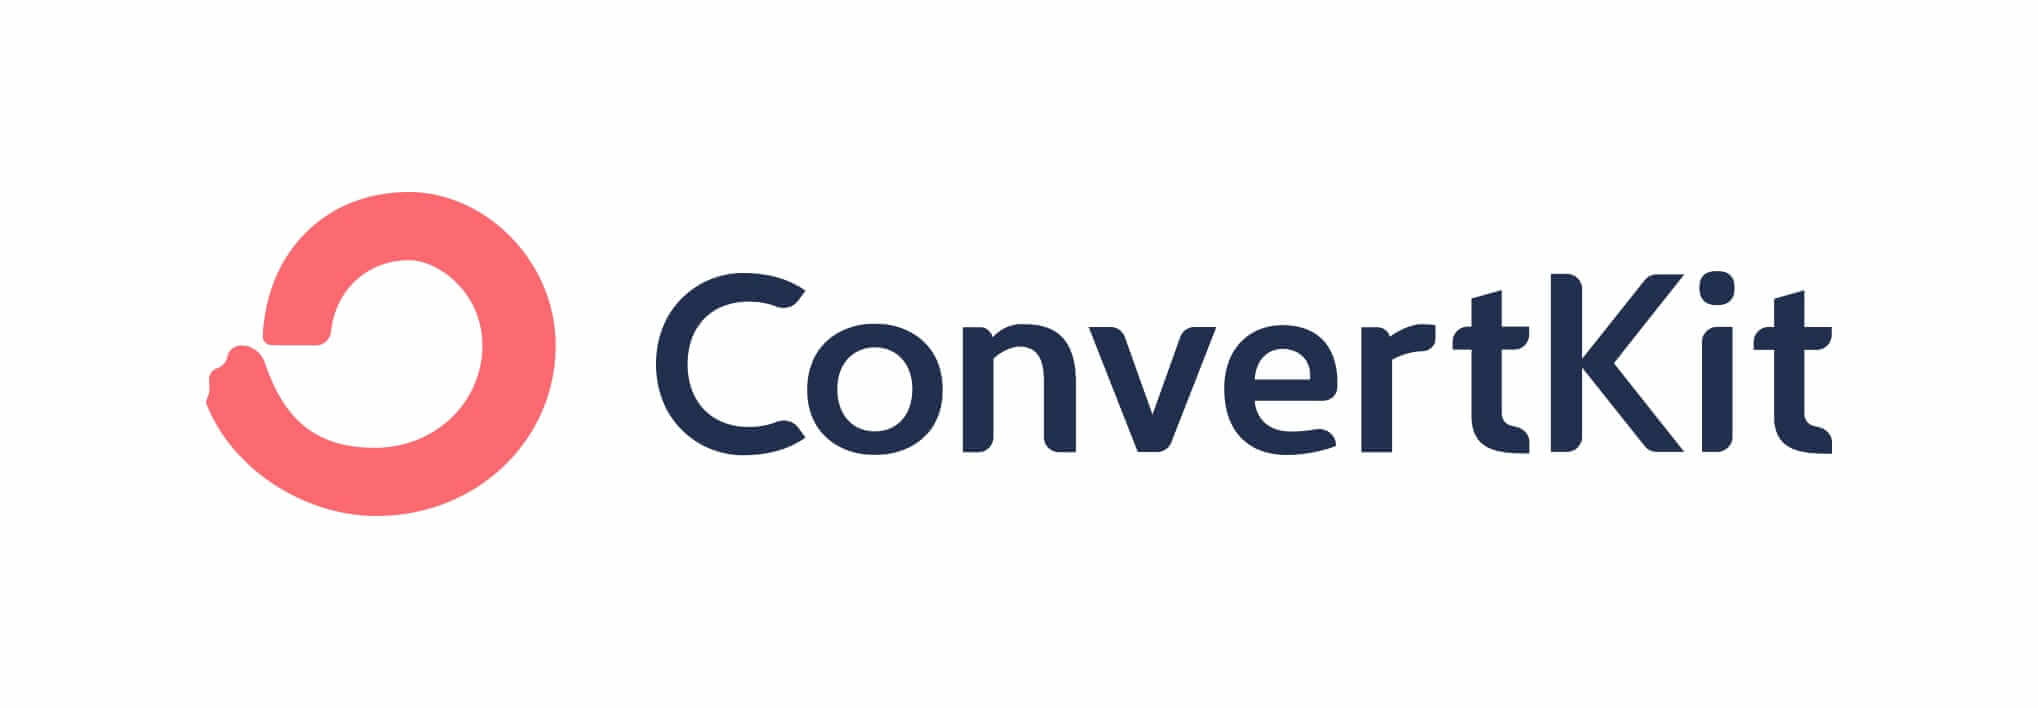 ConvertKit Brand - ConvertKit